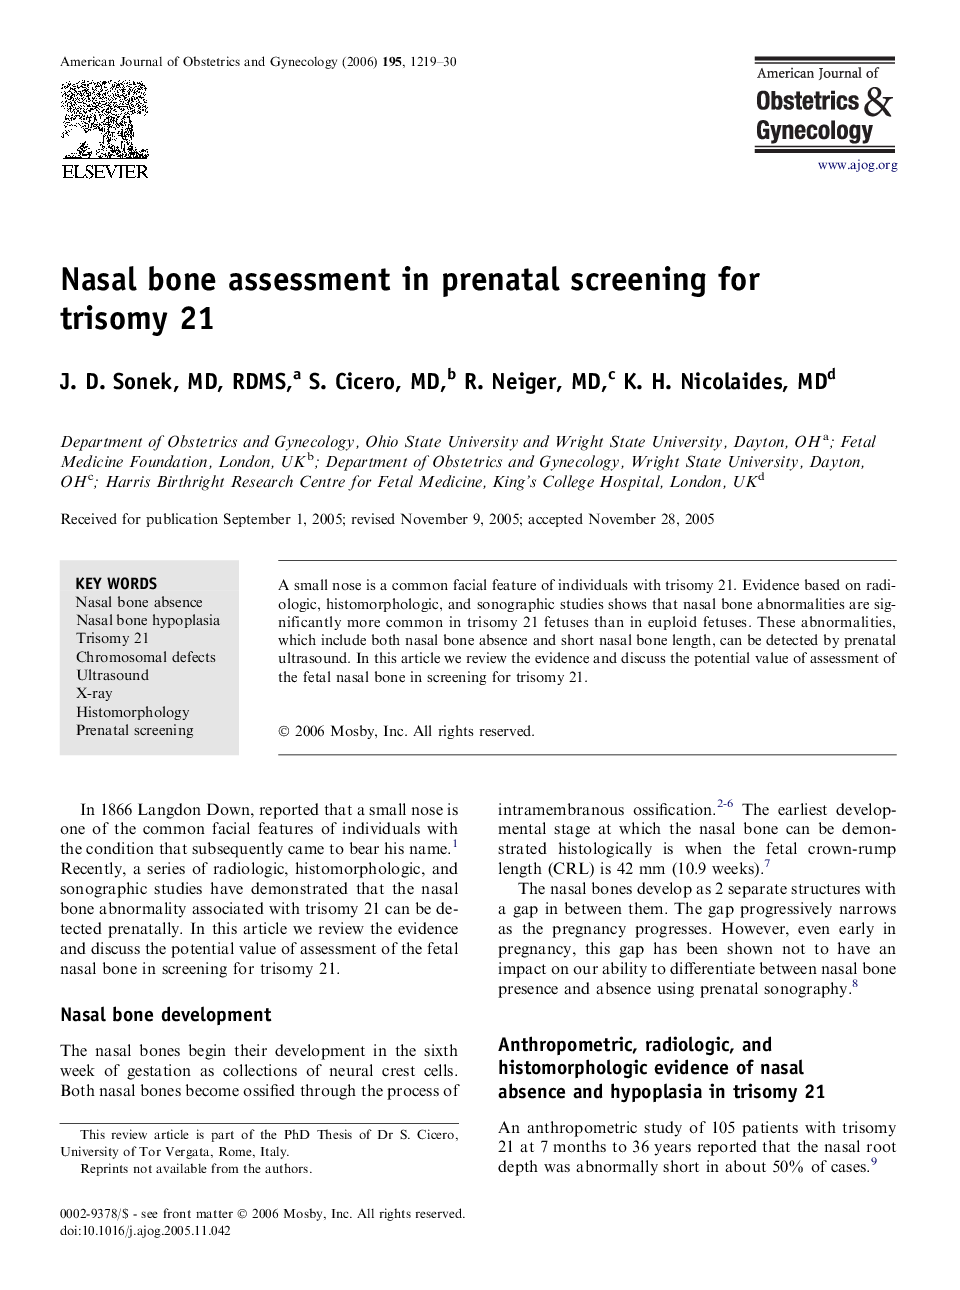 Nasal bone assessment in prenatal screening for trisomy 21 